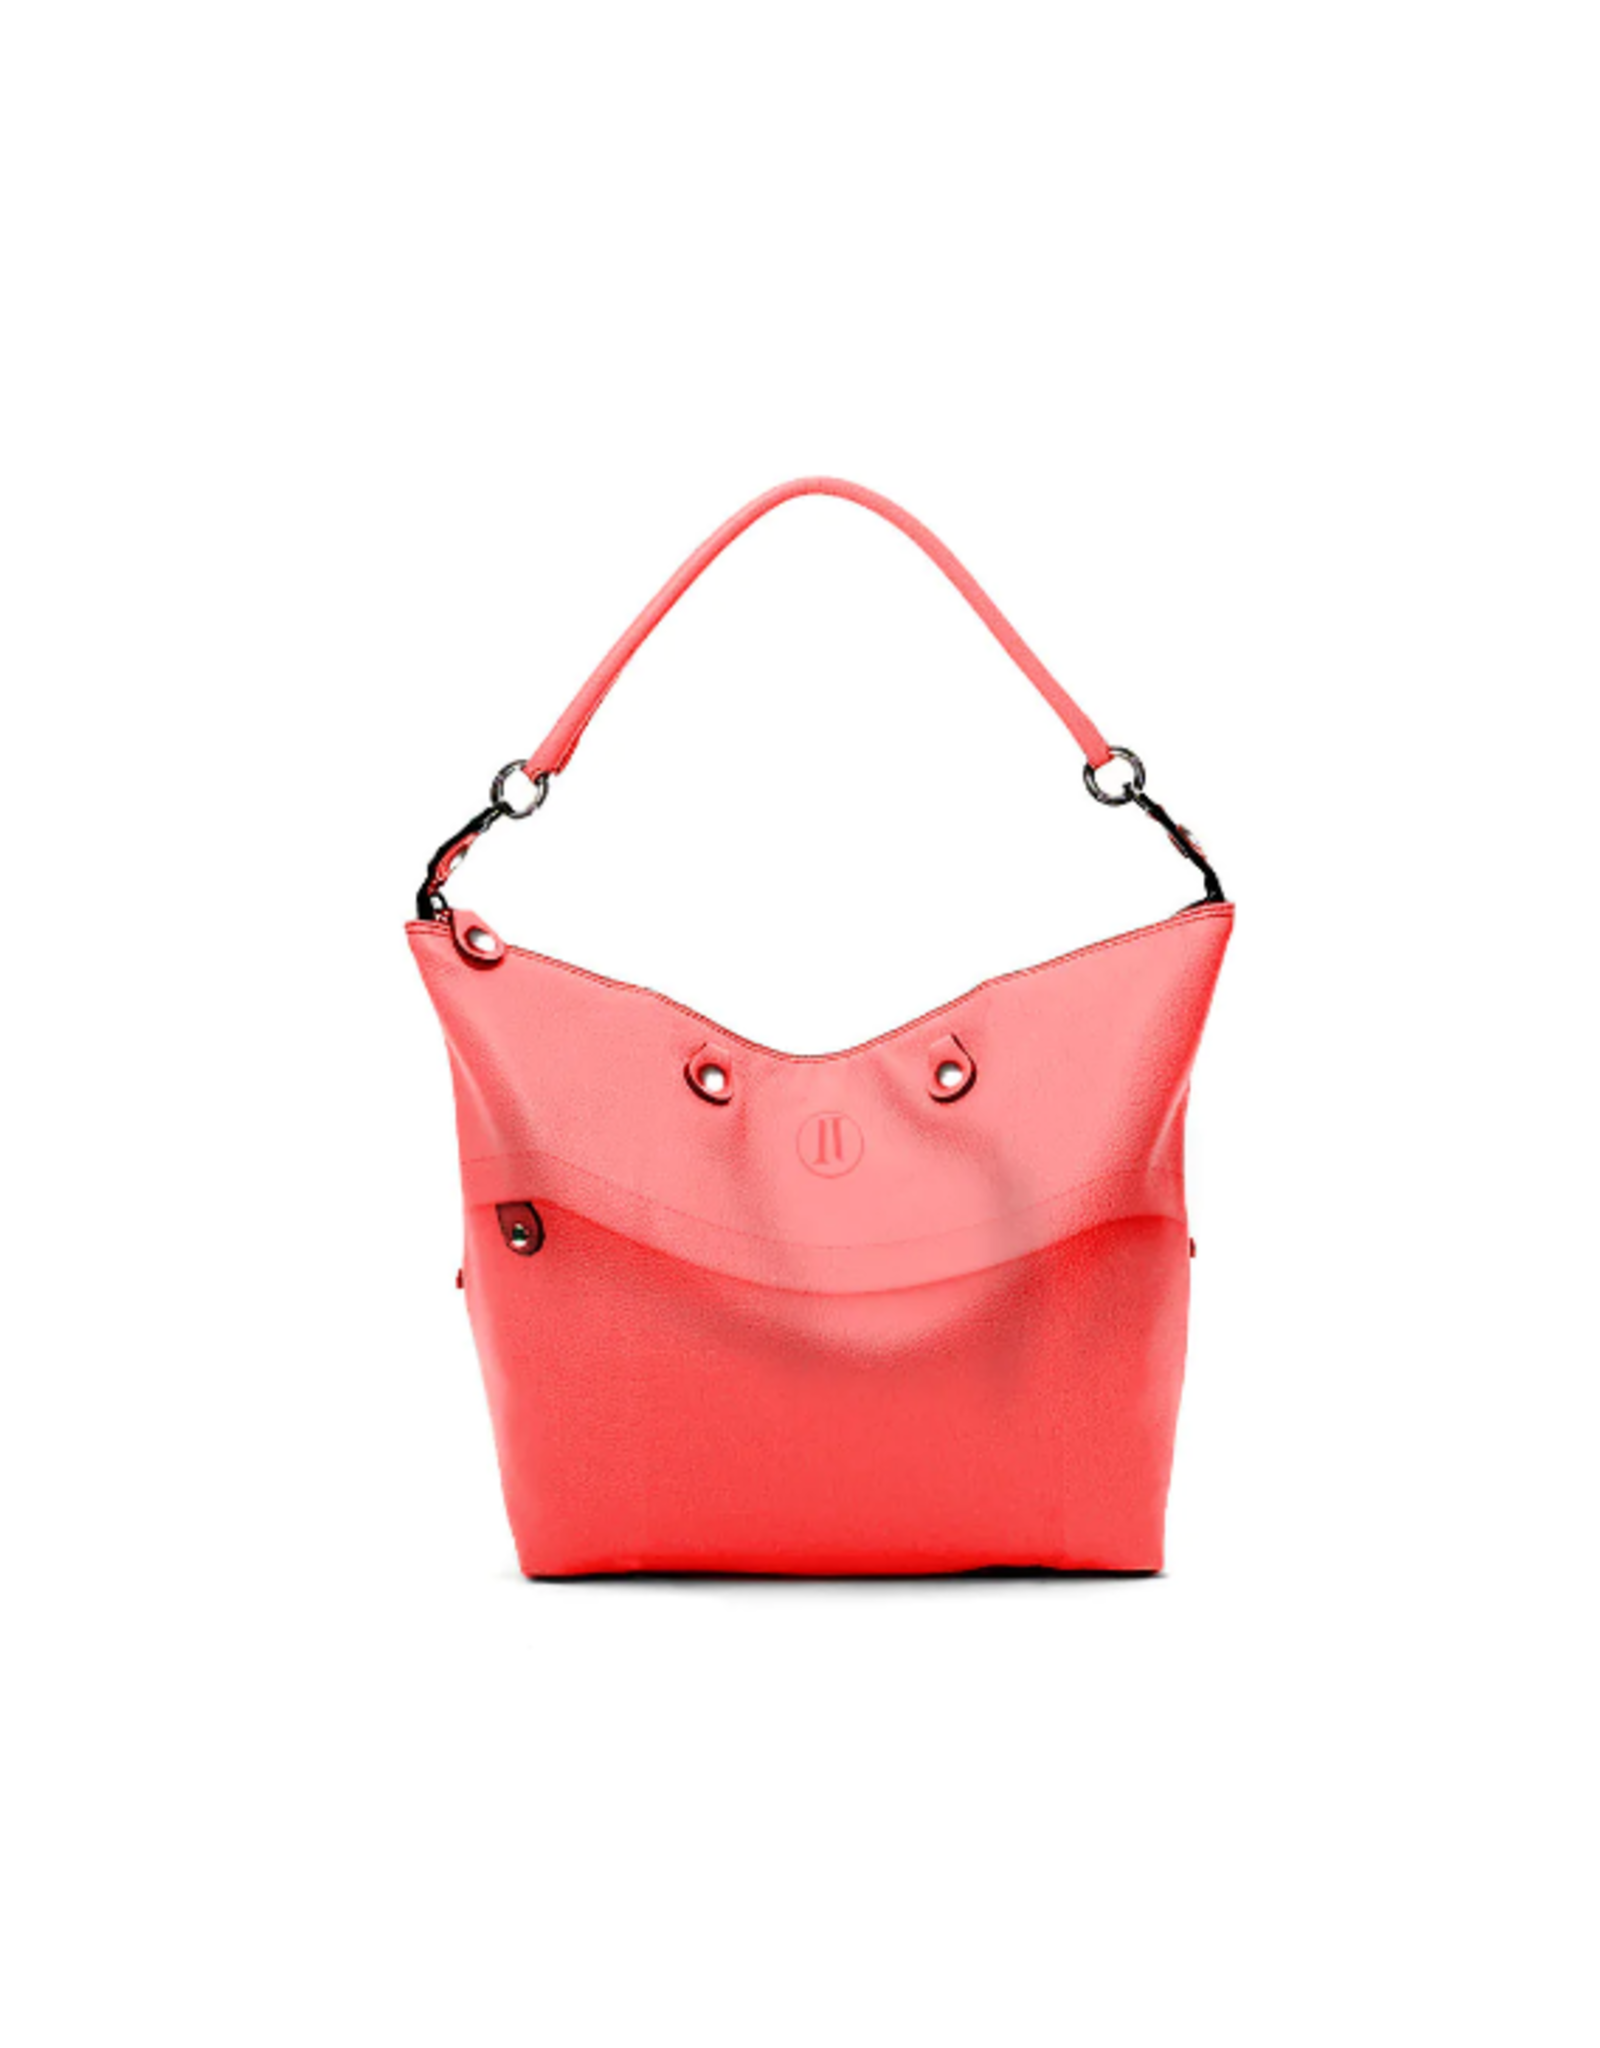 Italian Idea Red Small Genuine Pebble Leather 5 in 1 Convertible Bag